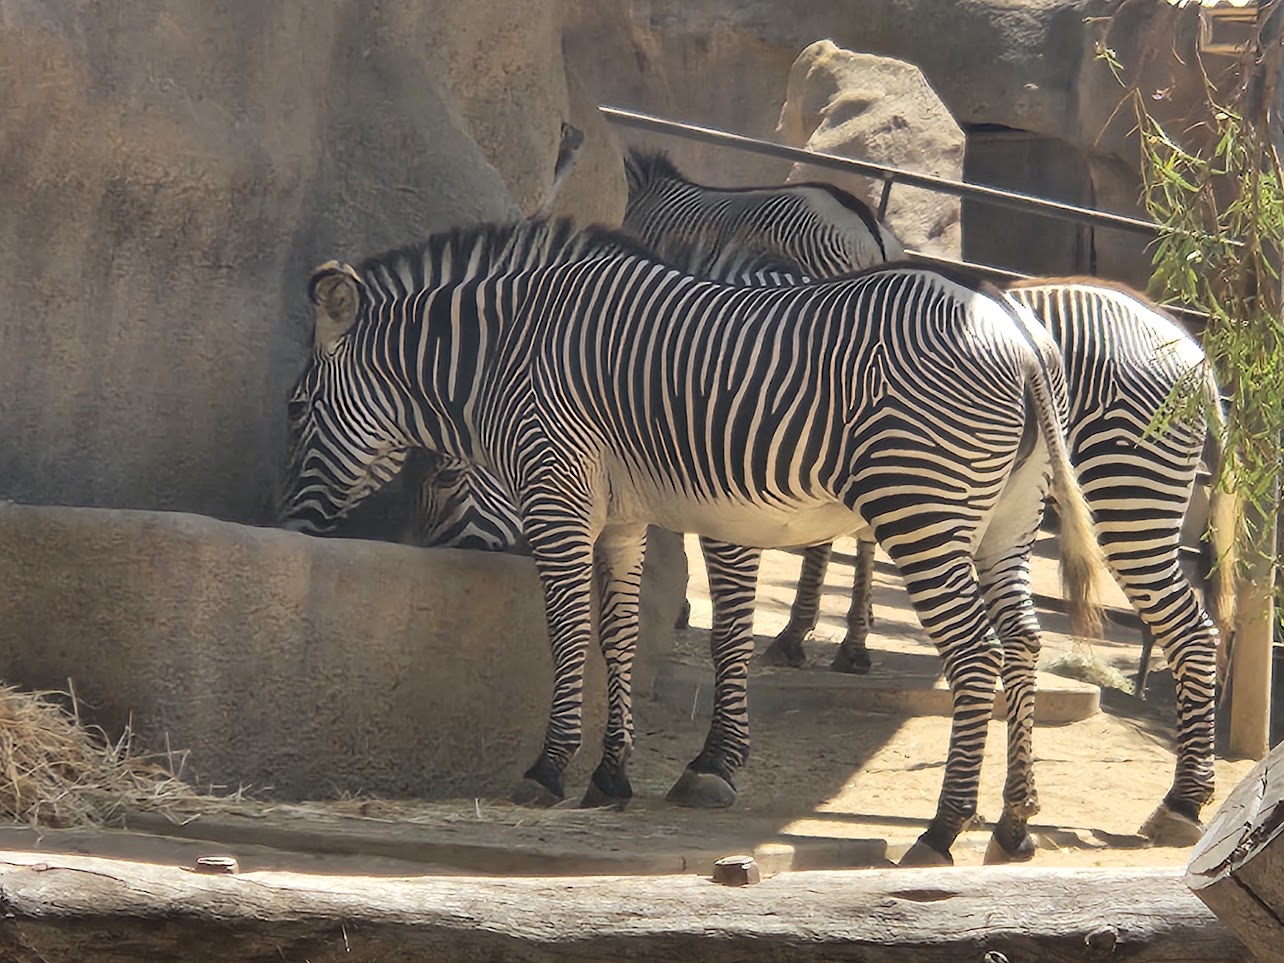 Zebra feeding time